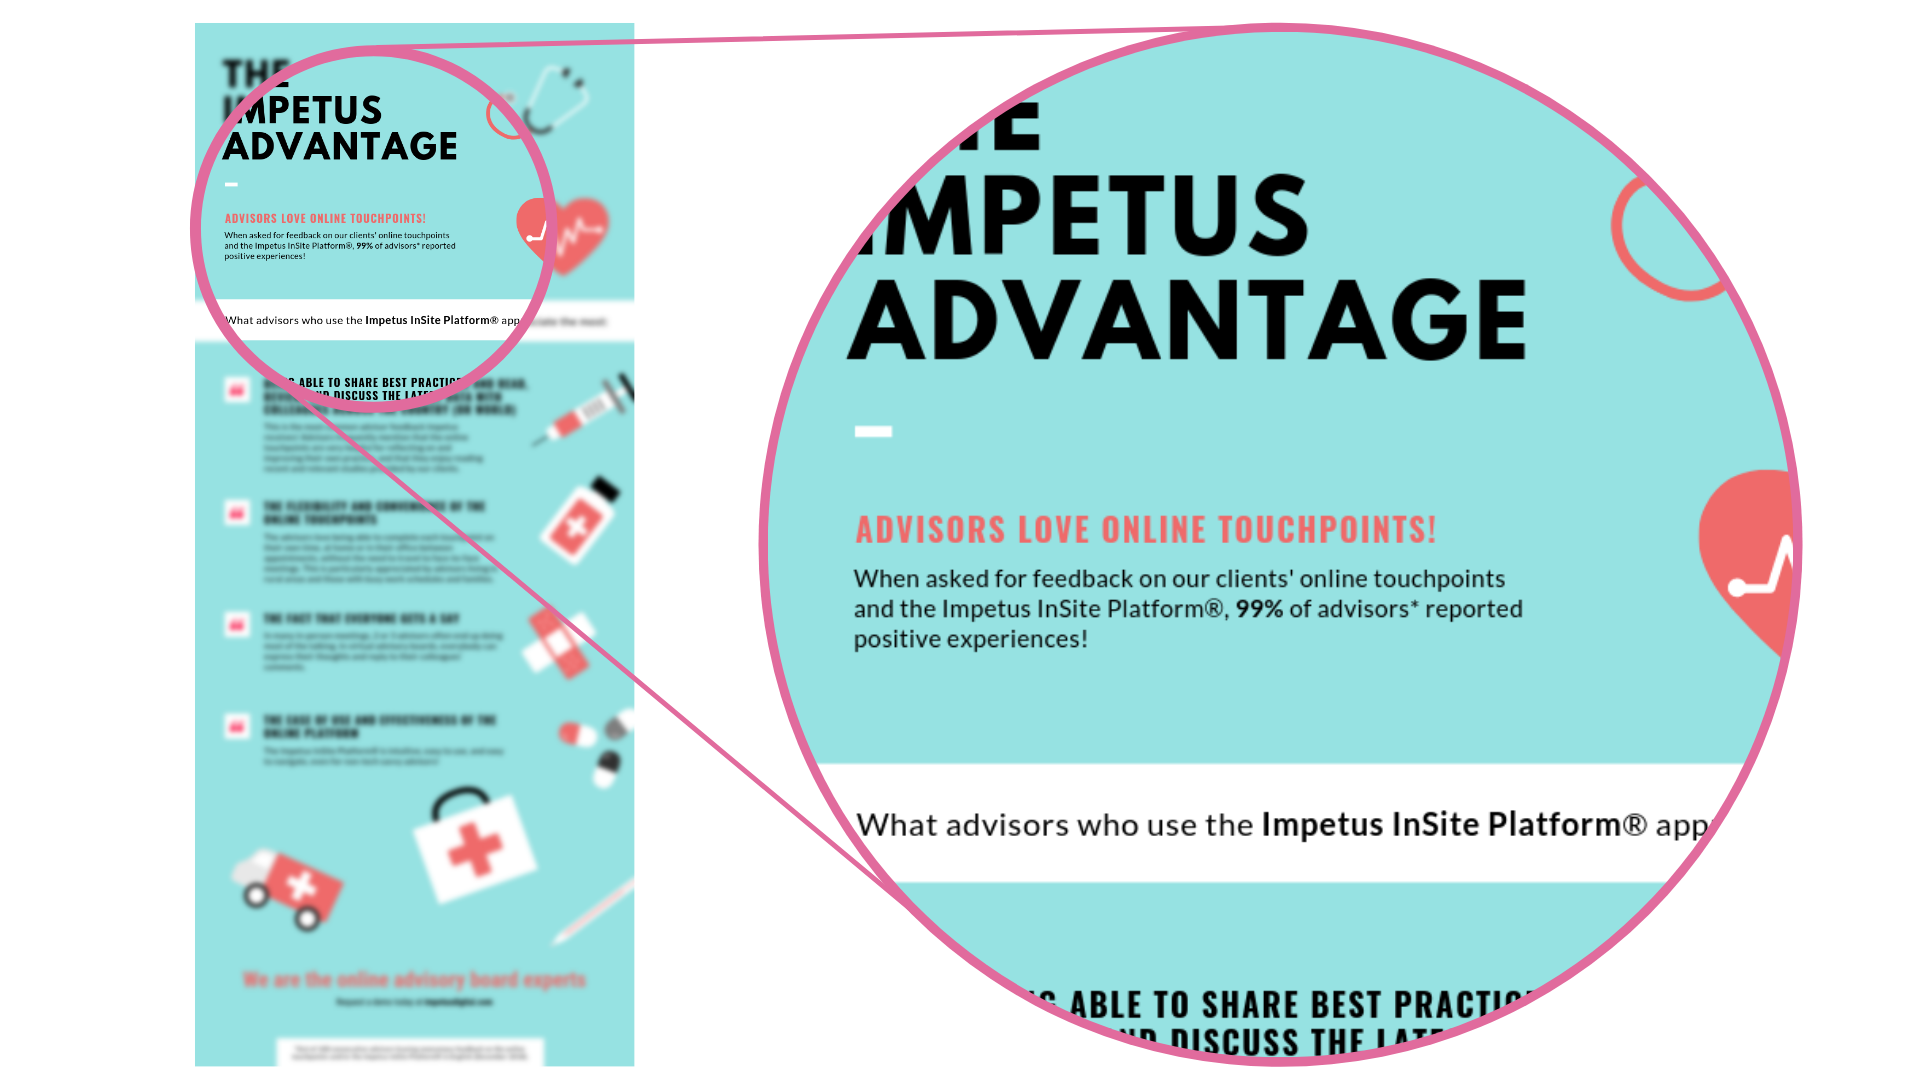 Infographic: The Impetus Advantage